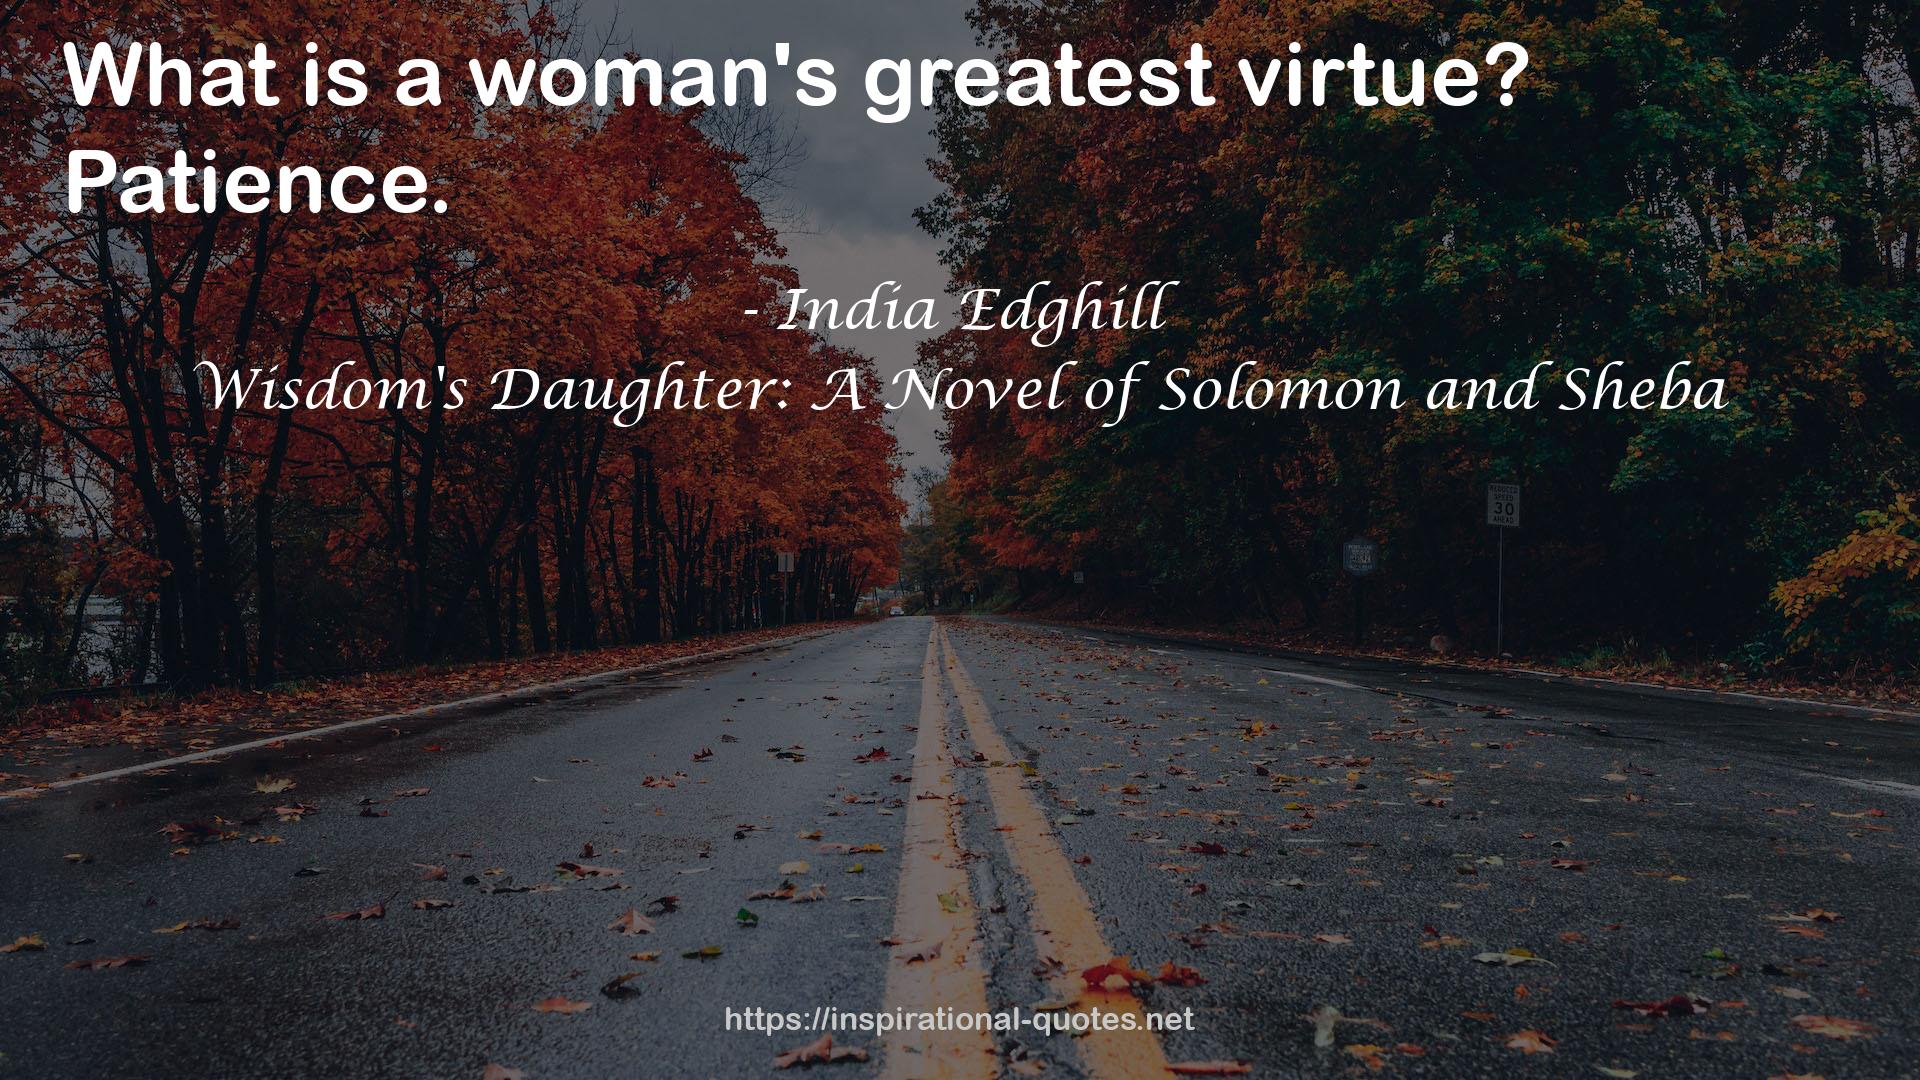 Wisdom's Daughter: A Novel of Solomon and Sheba QUOTES